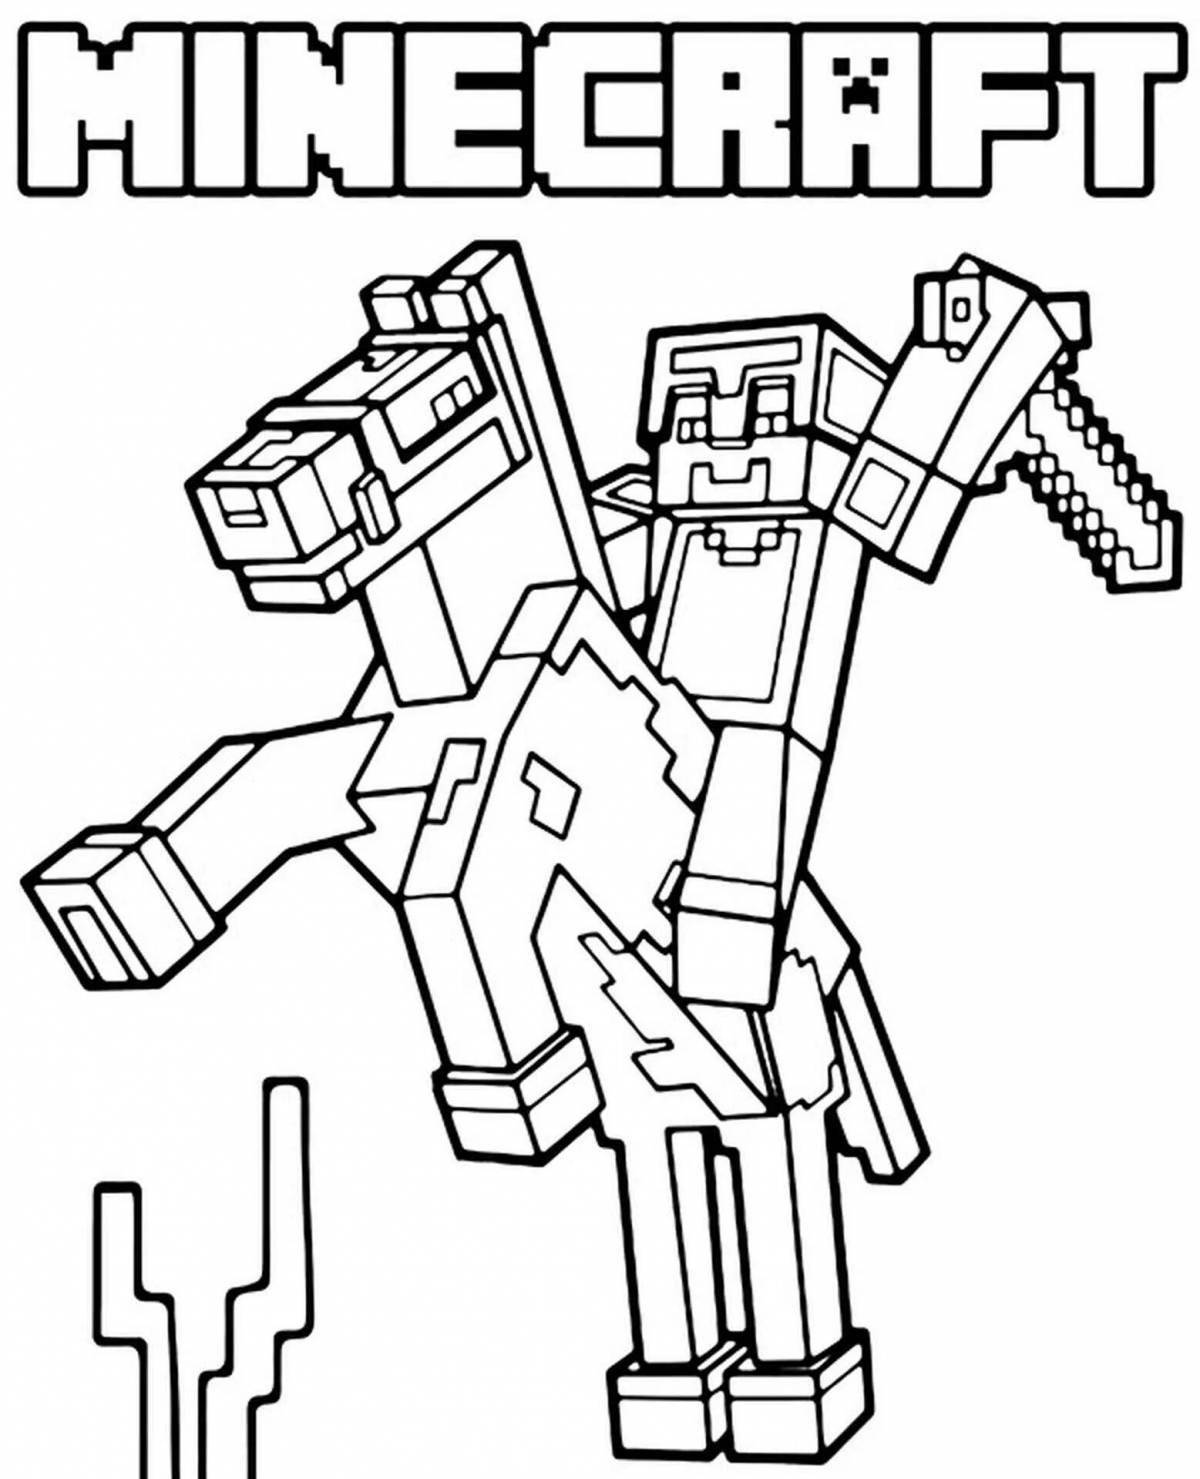 Bright minecraft logo coloring page